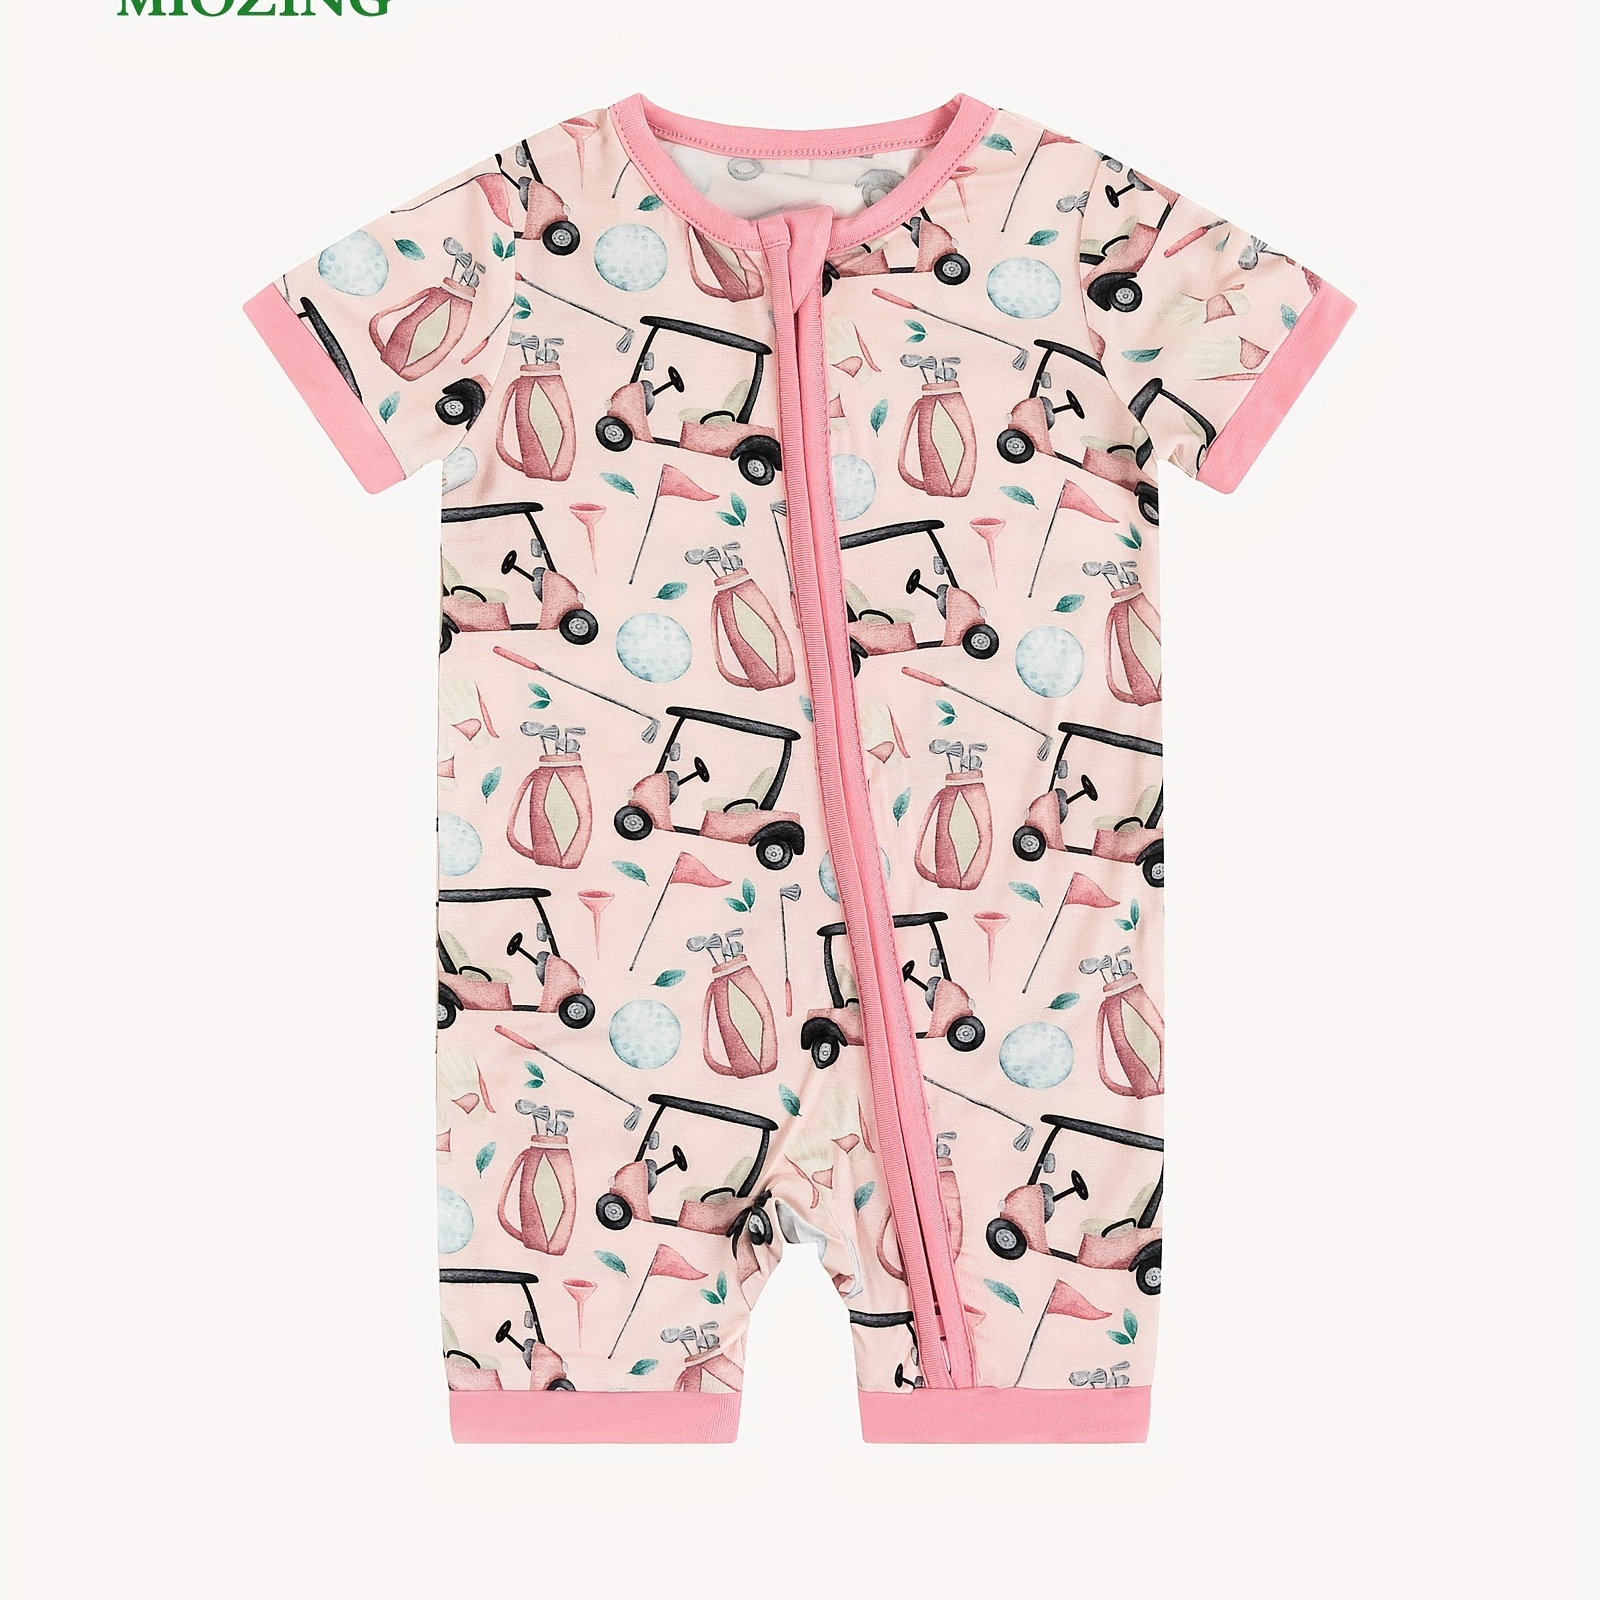 

Miozing Bamboo Fiber Bodysuit For Baby, Cartoon Cute Car Pattern Zip Up Short Sleeve Onesie, Infant & Toddler Girl's Romper For Summer